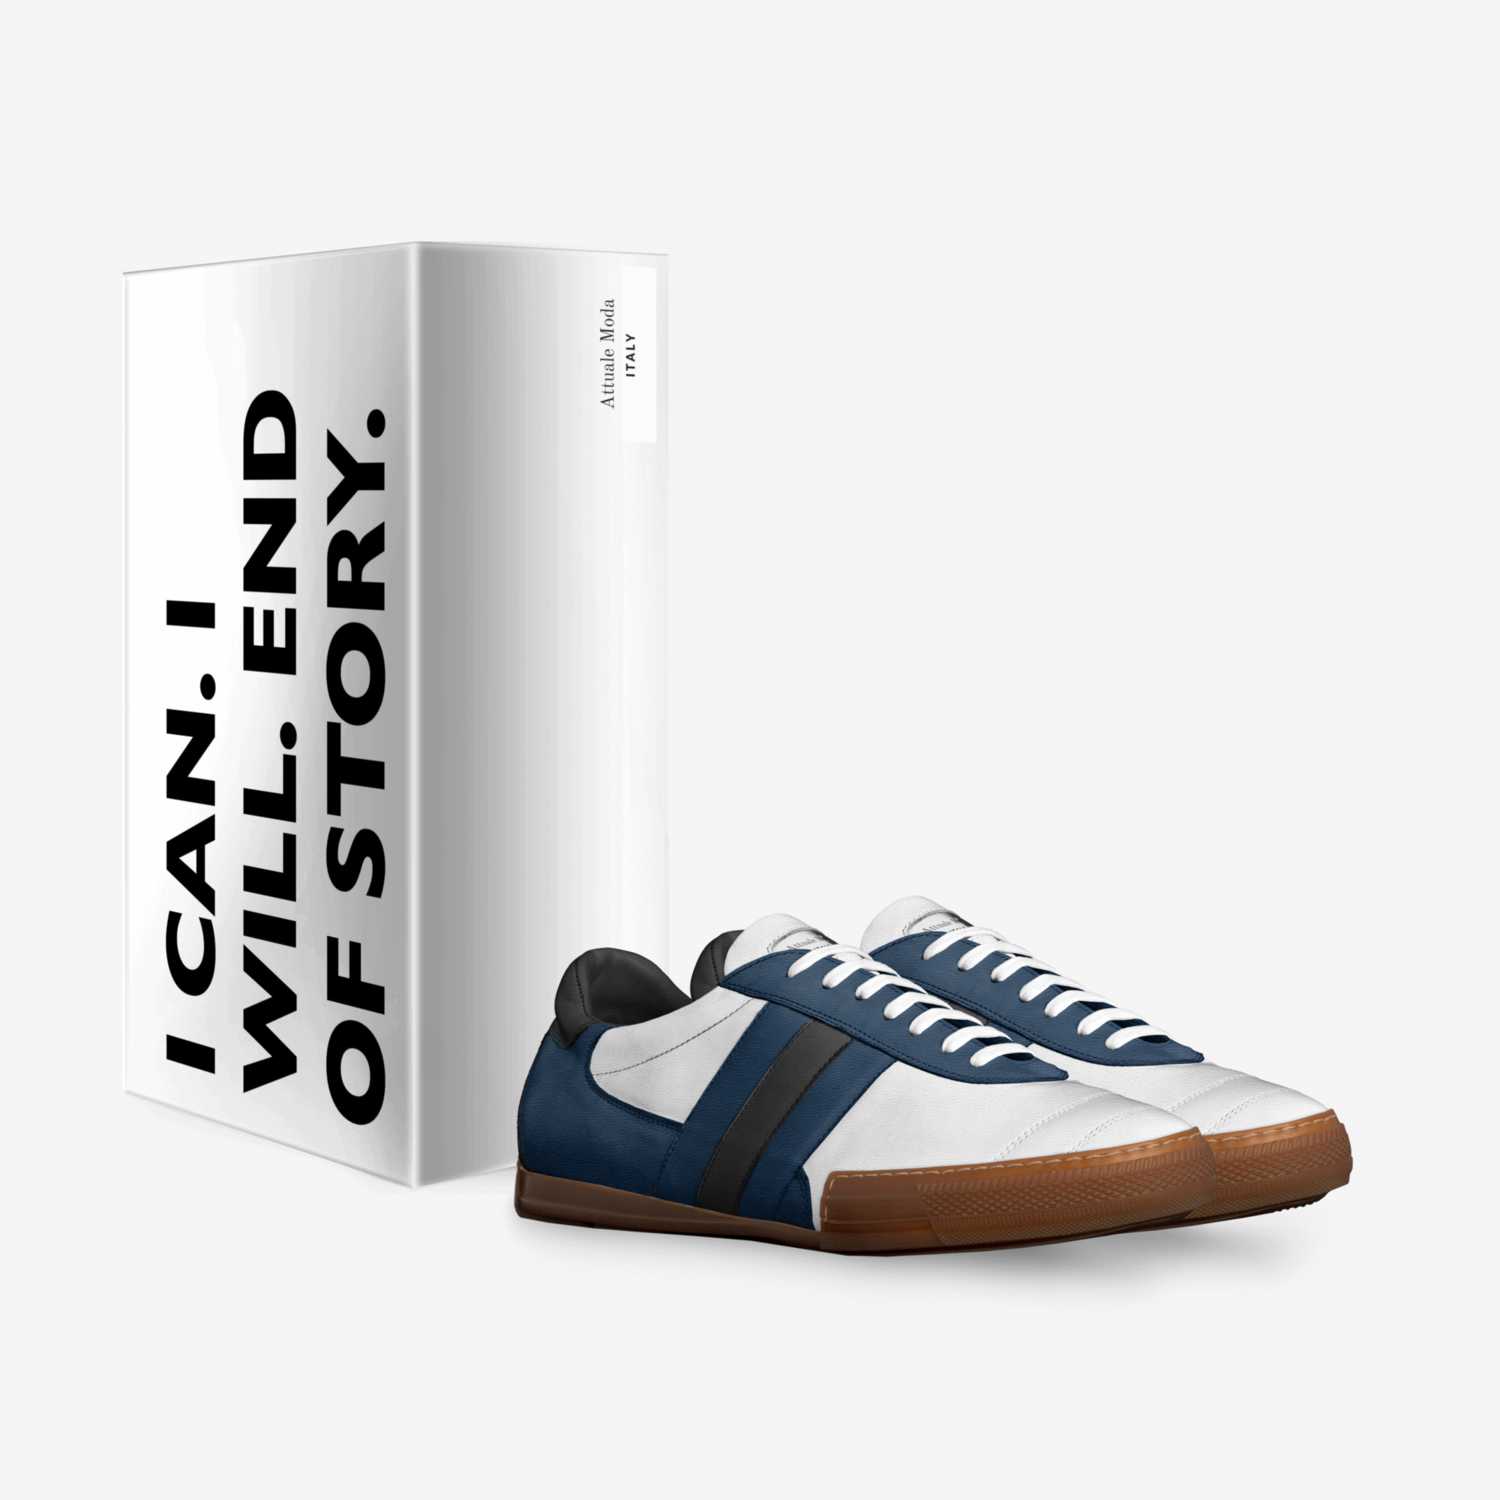 Goel Del Capici custom made in Italy shoes by Sebastian Thorhauge Jacobsen | Box view